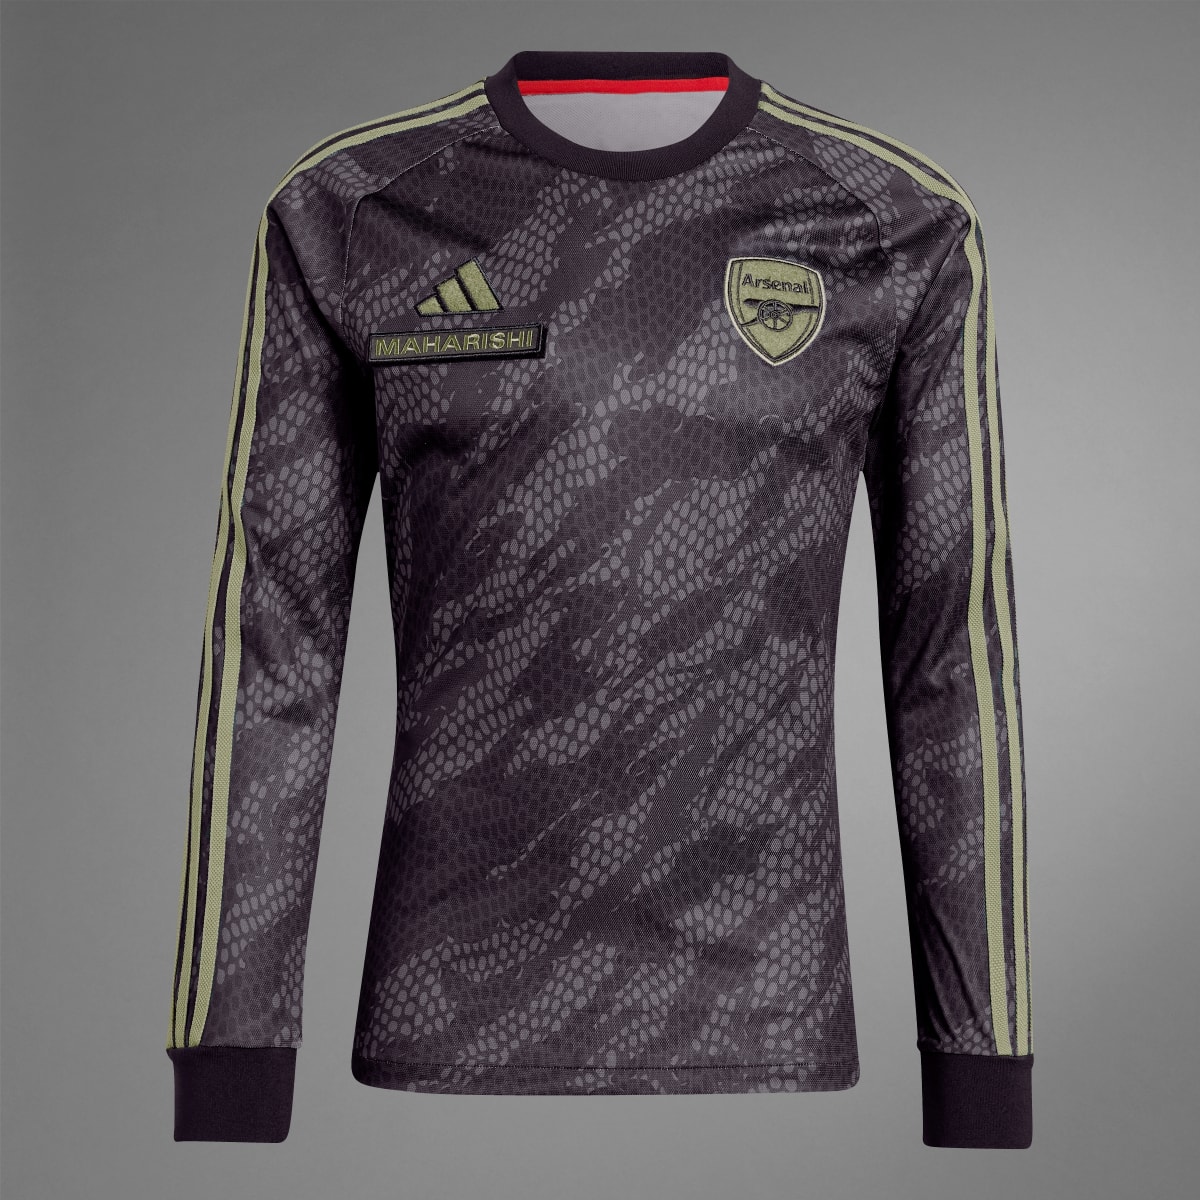 Adidas Arsenal x Maharishi Long Sleeve Jersey. 10